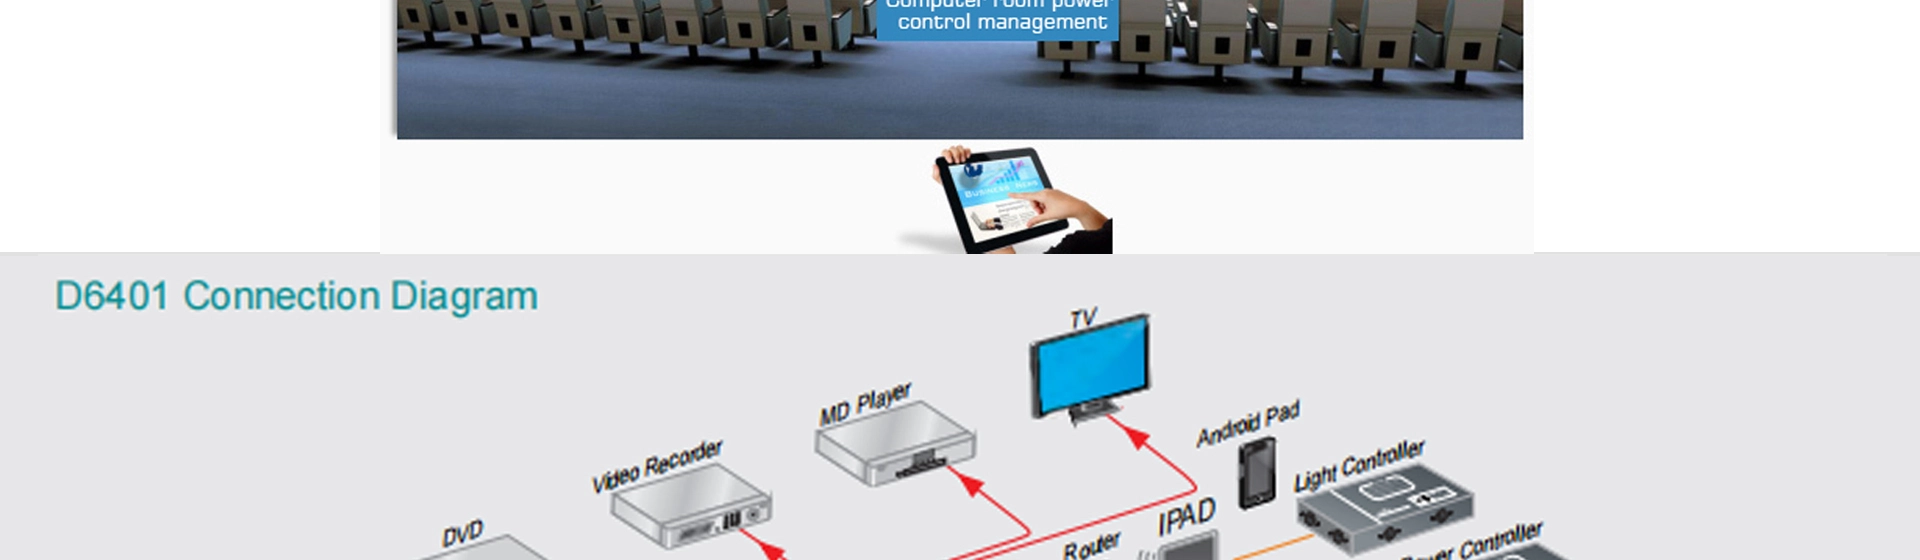 Host de control central multimedia de red programable